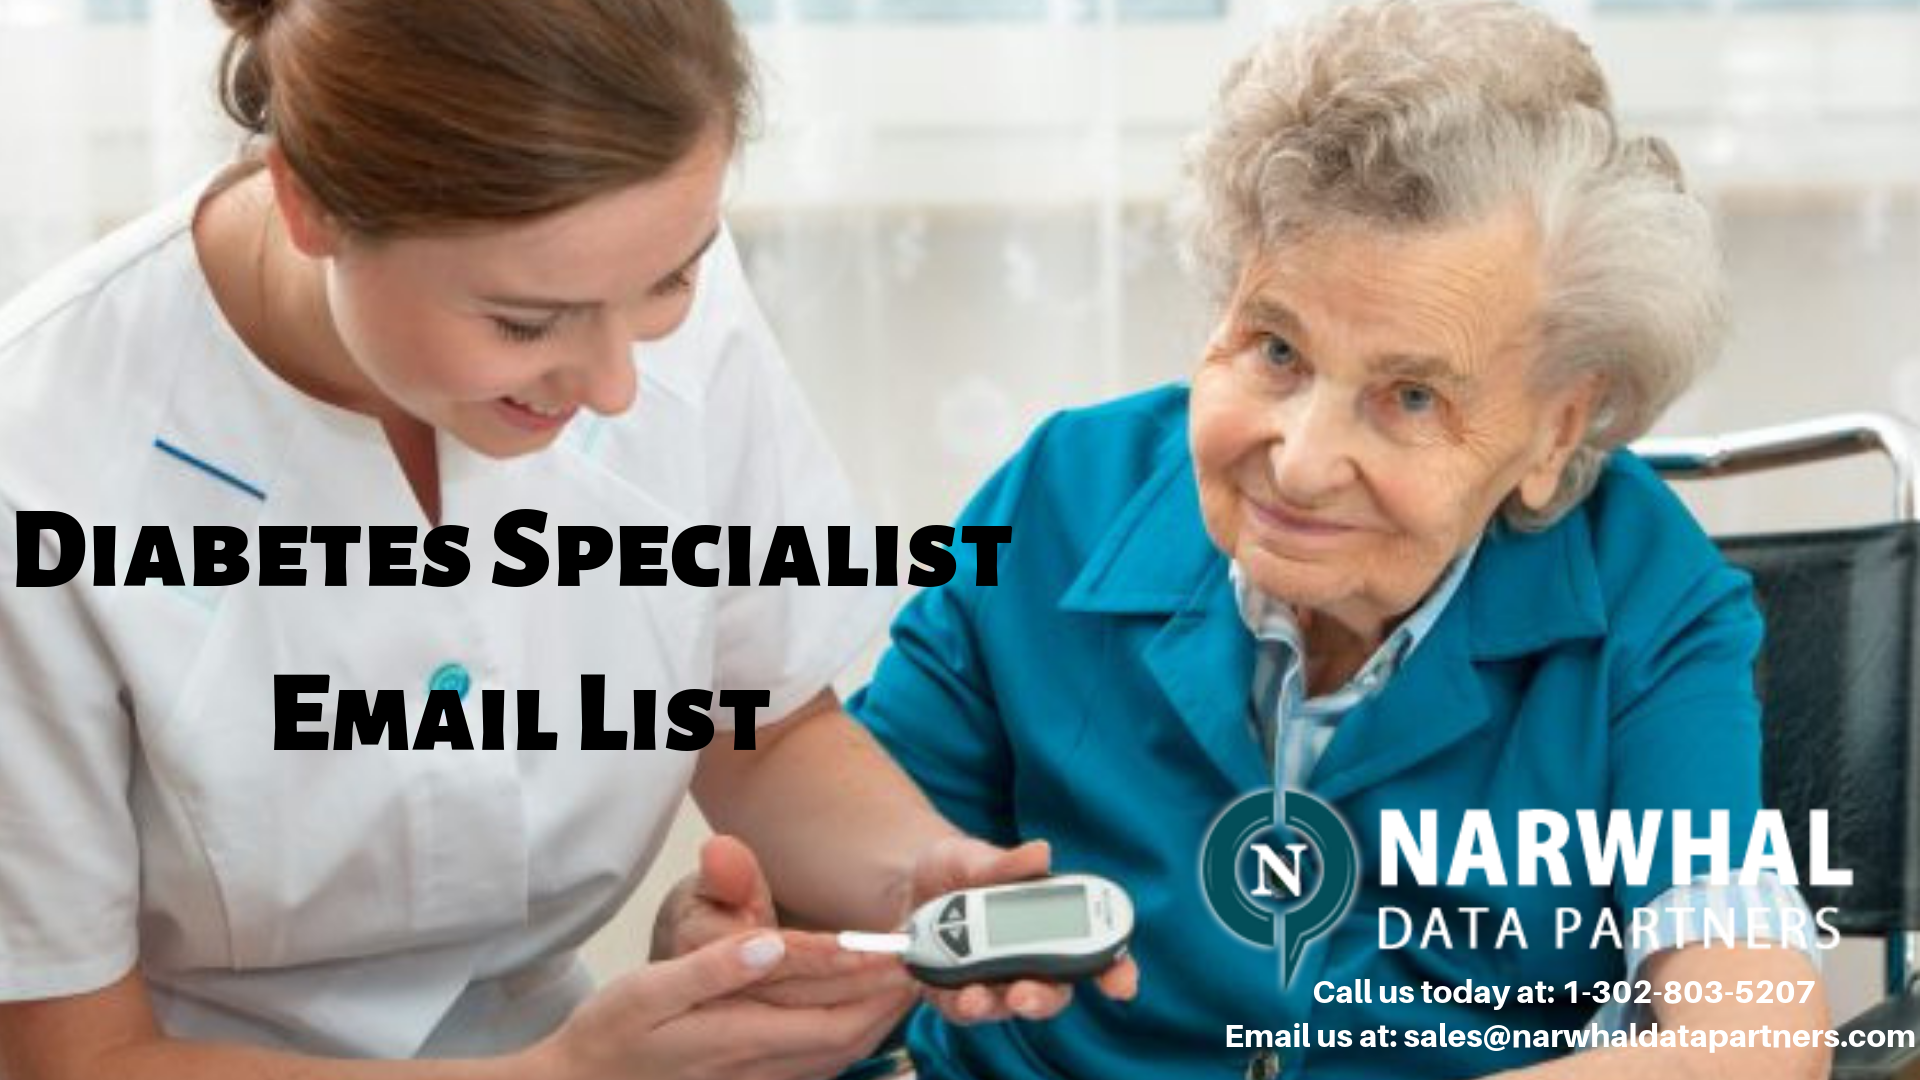 http://narwhaldatapartners.com/diabetes-specialist-email-list.html